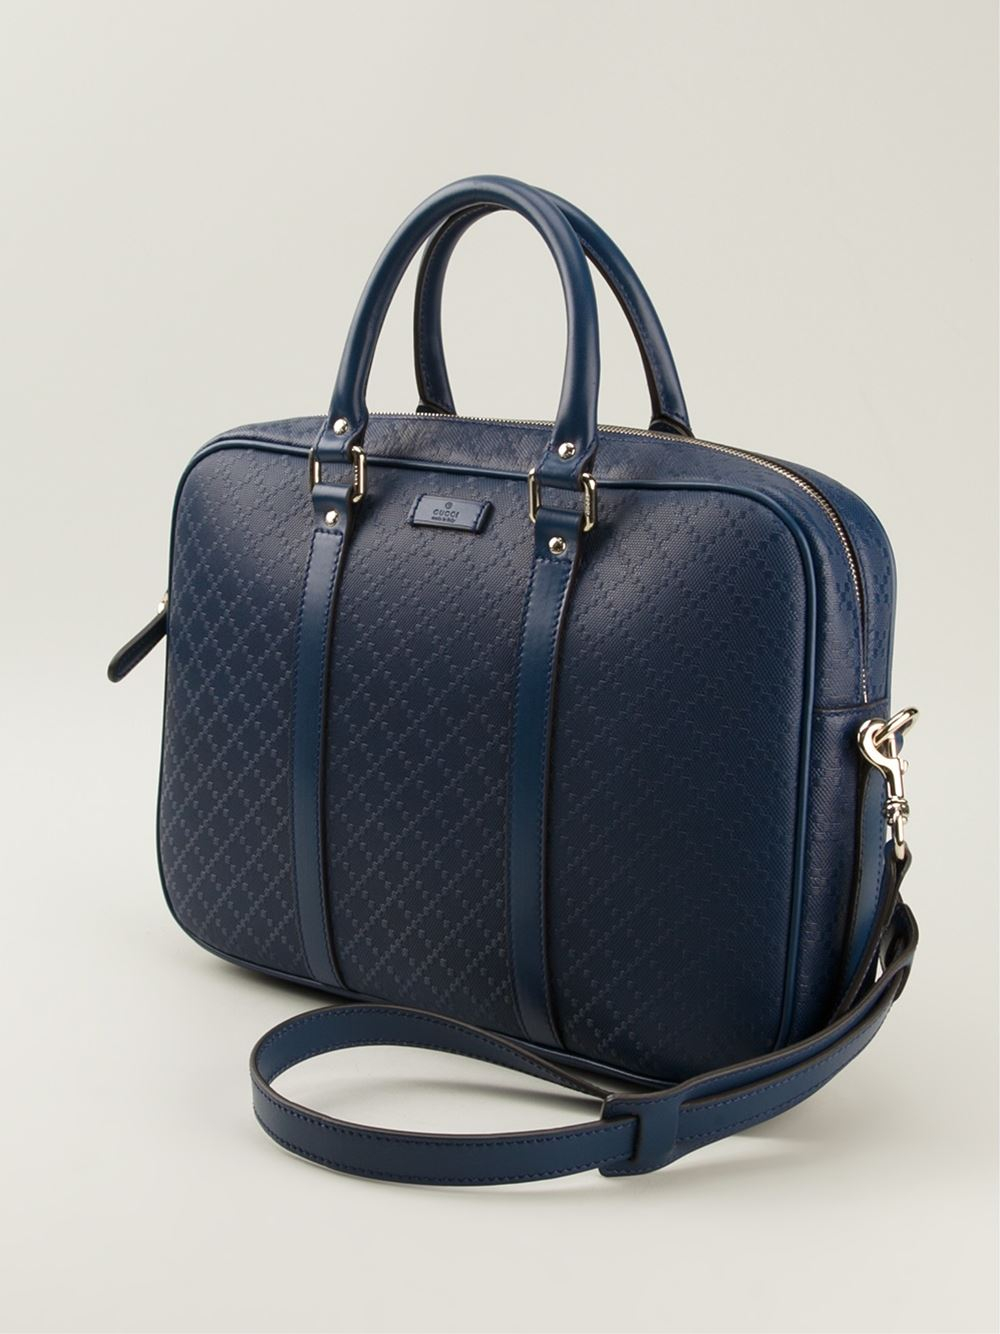 Lyst - Gucci Diamond Laptop Bag in Blue for Men